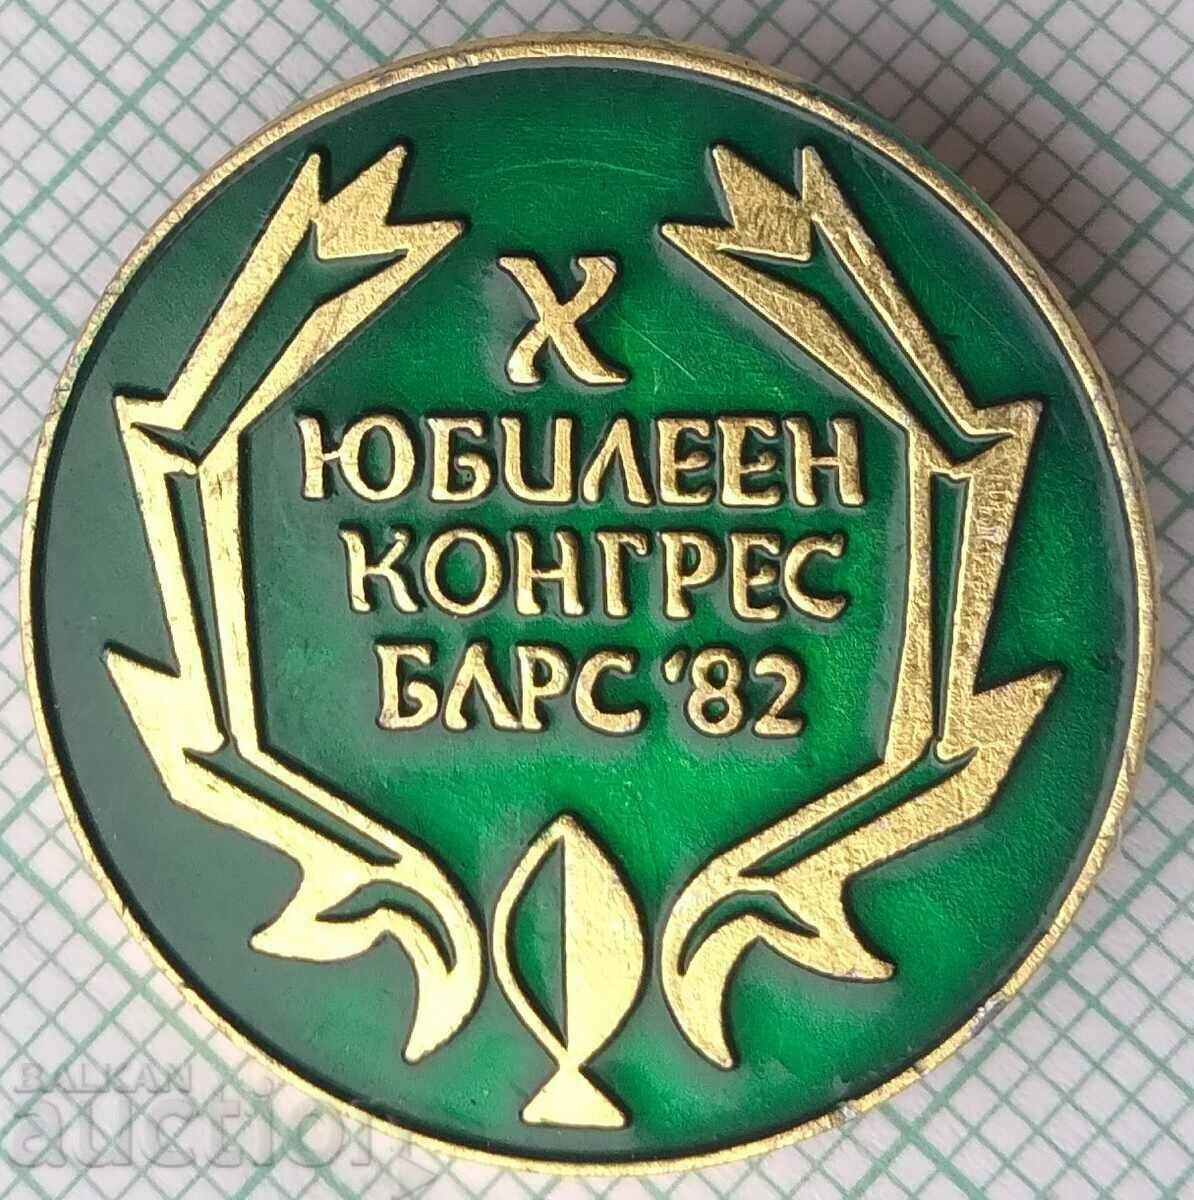 15713 Hunting and Fishing Union BLRS - Anniversary Congress 1982